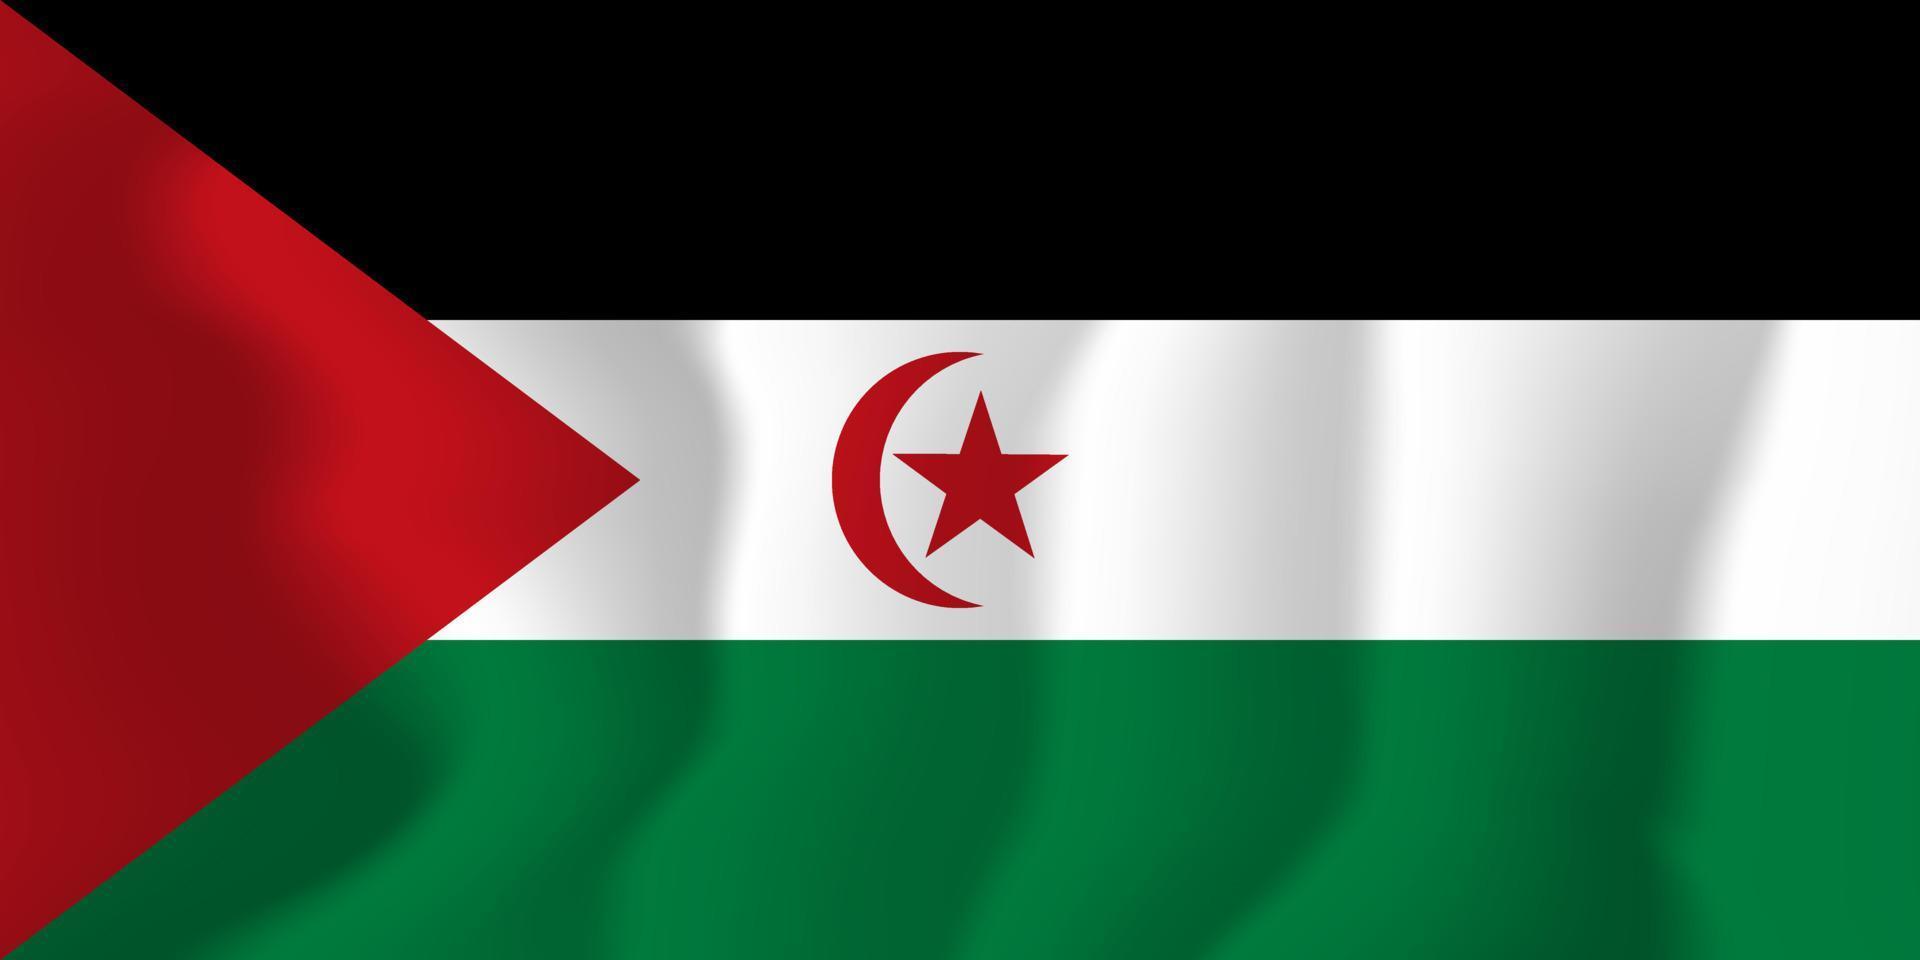 Sahrawi Arab Democratic Republic National Waving Flag Background Illustration vector